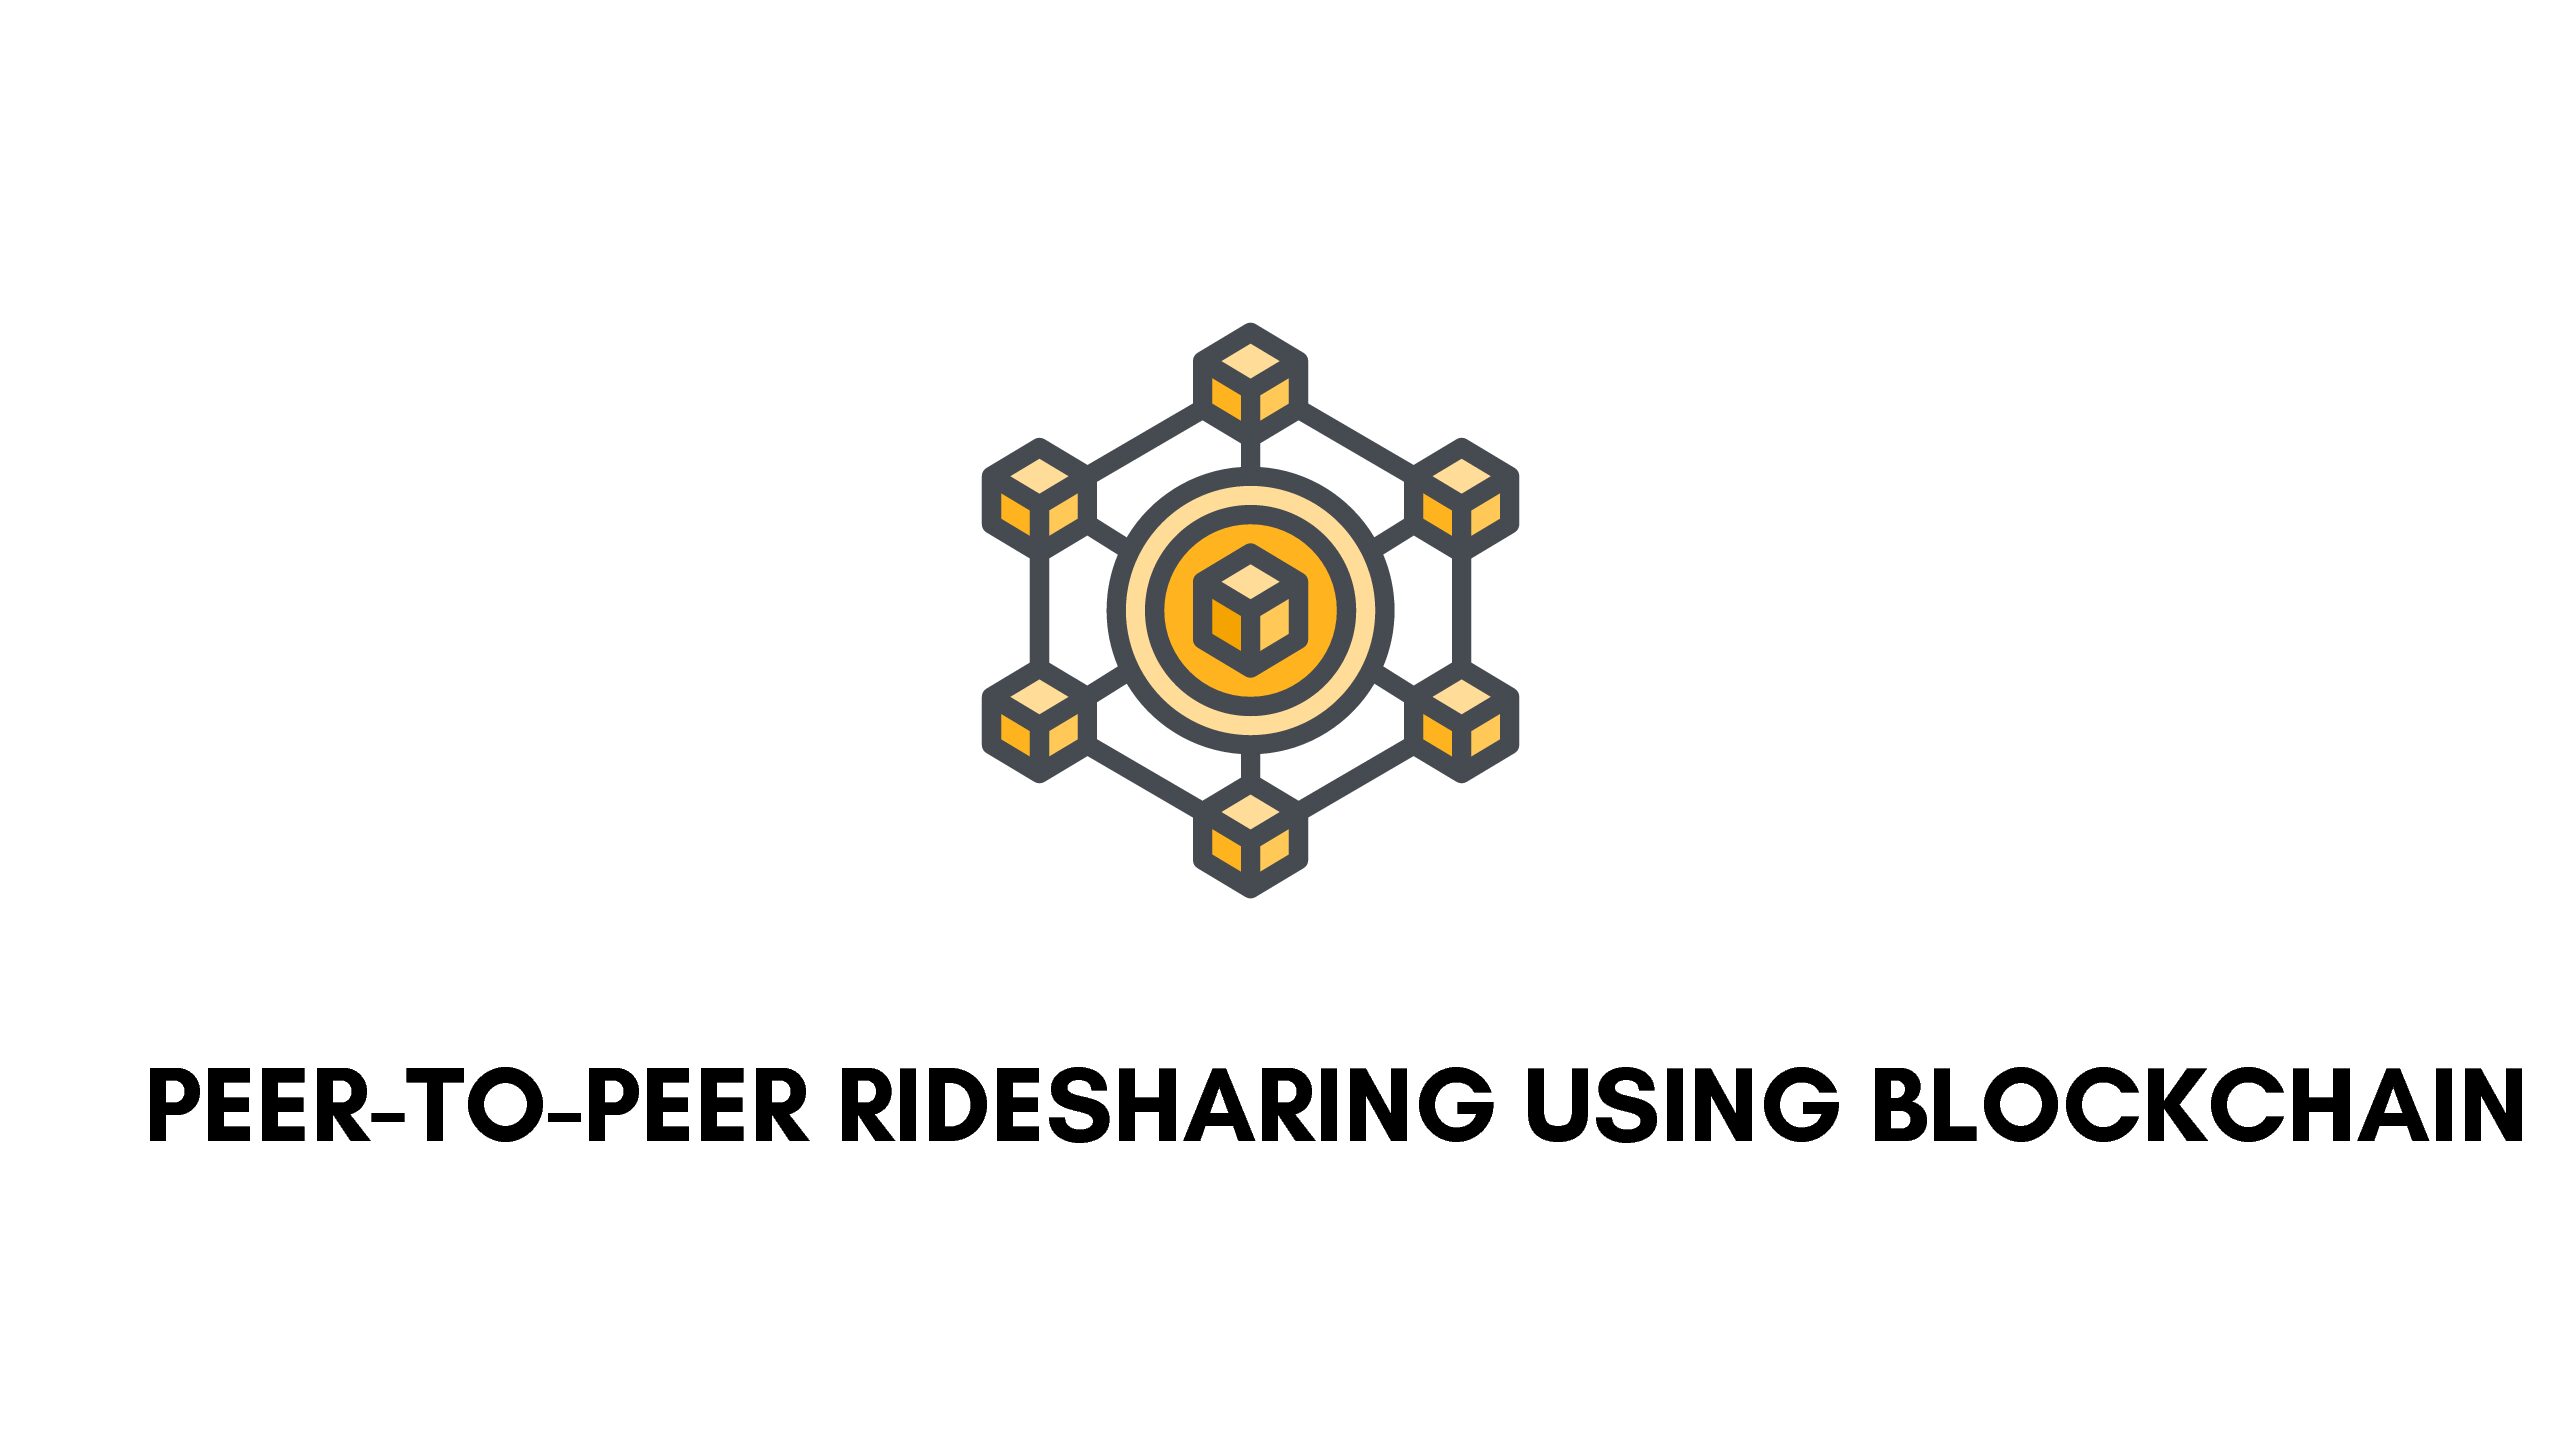 Peer-to-peer ridesharing using blockchain